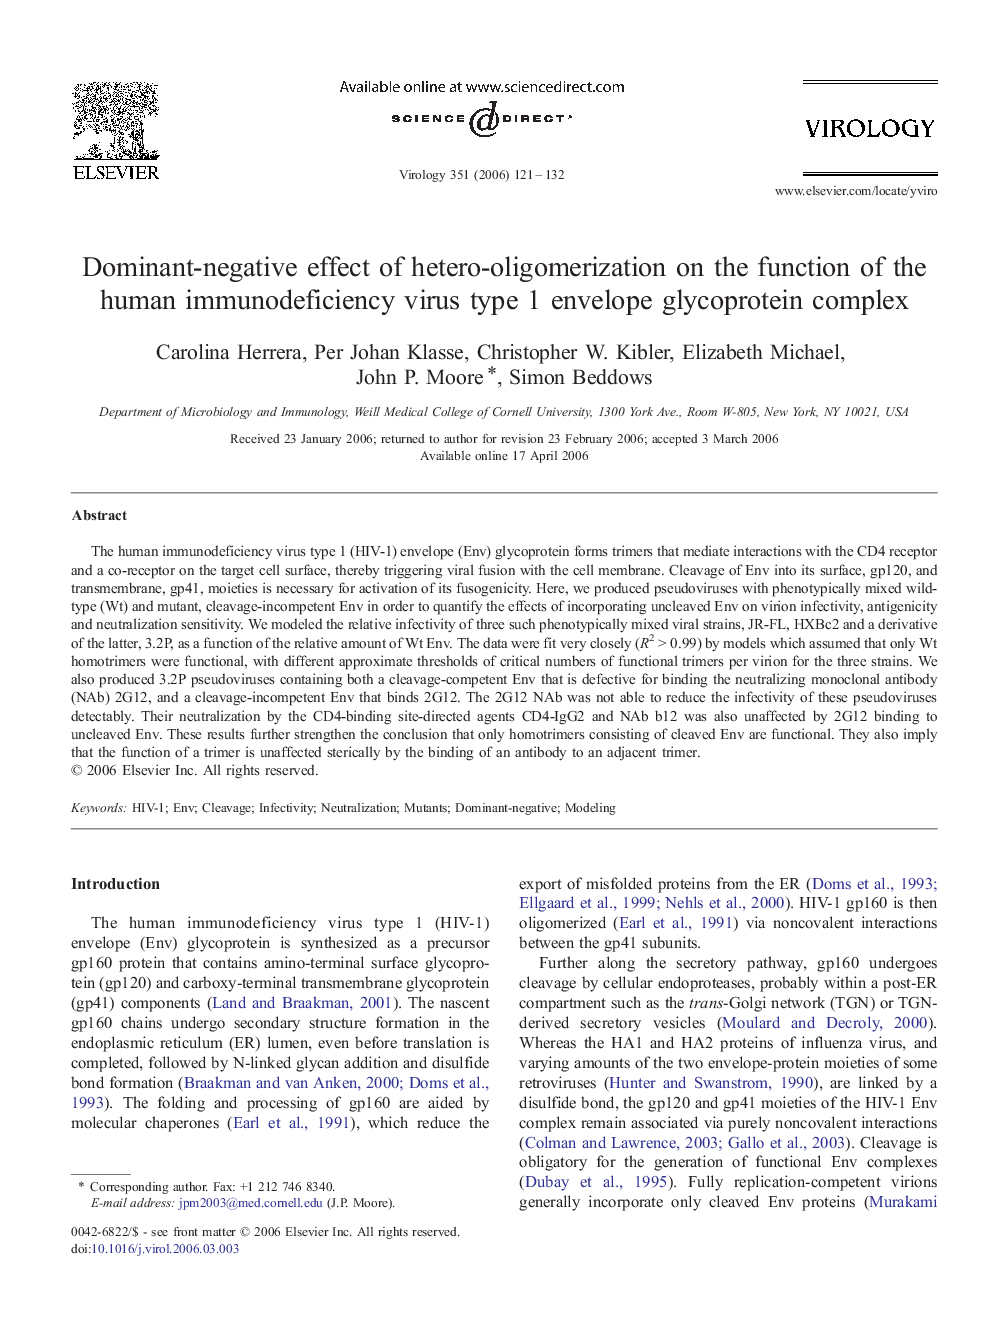 Dominant-negative effect of hetero-oligomerization on the function of the human immunodeficiency virus type 1 envelope glycoprotein complex